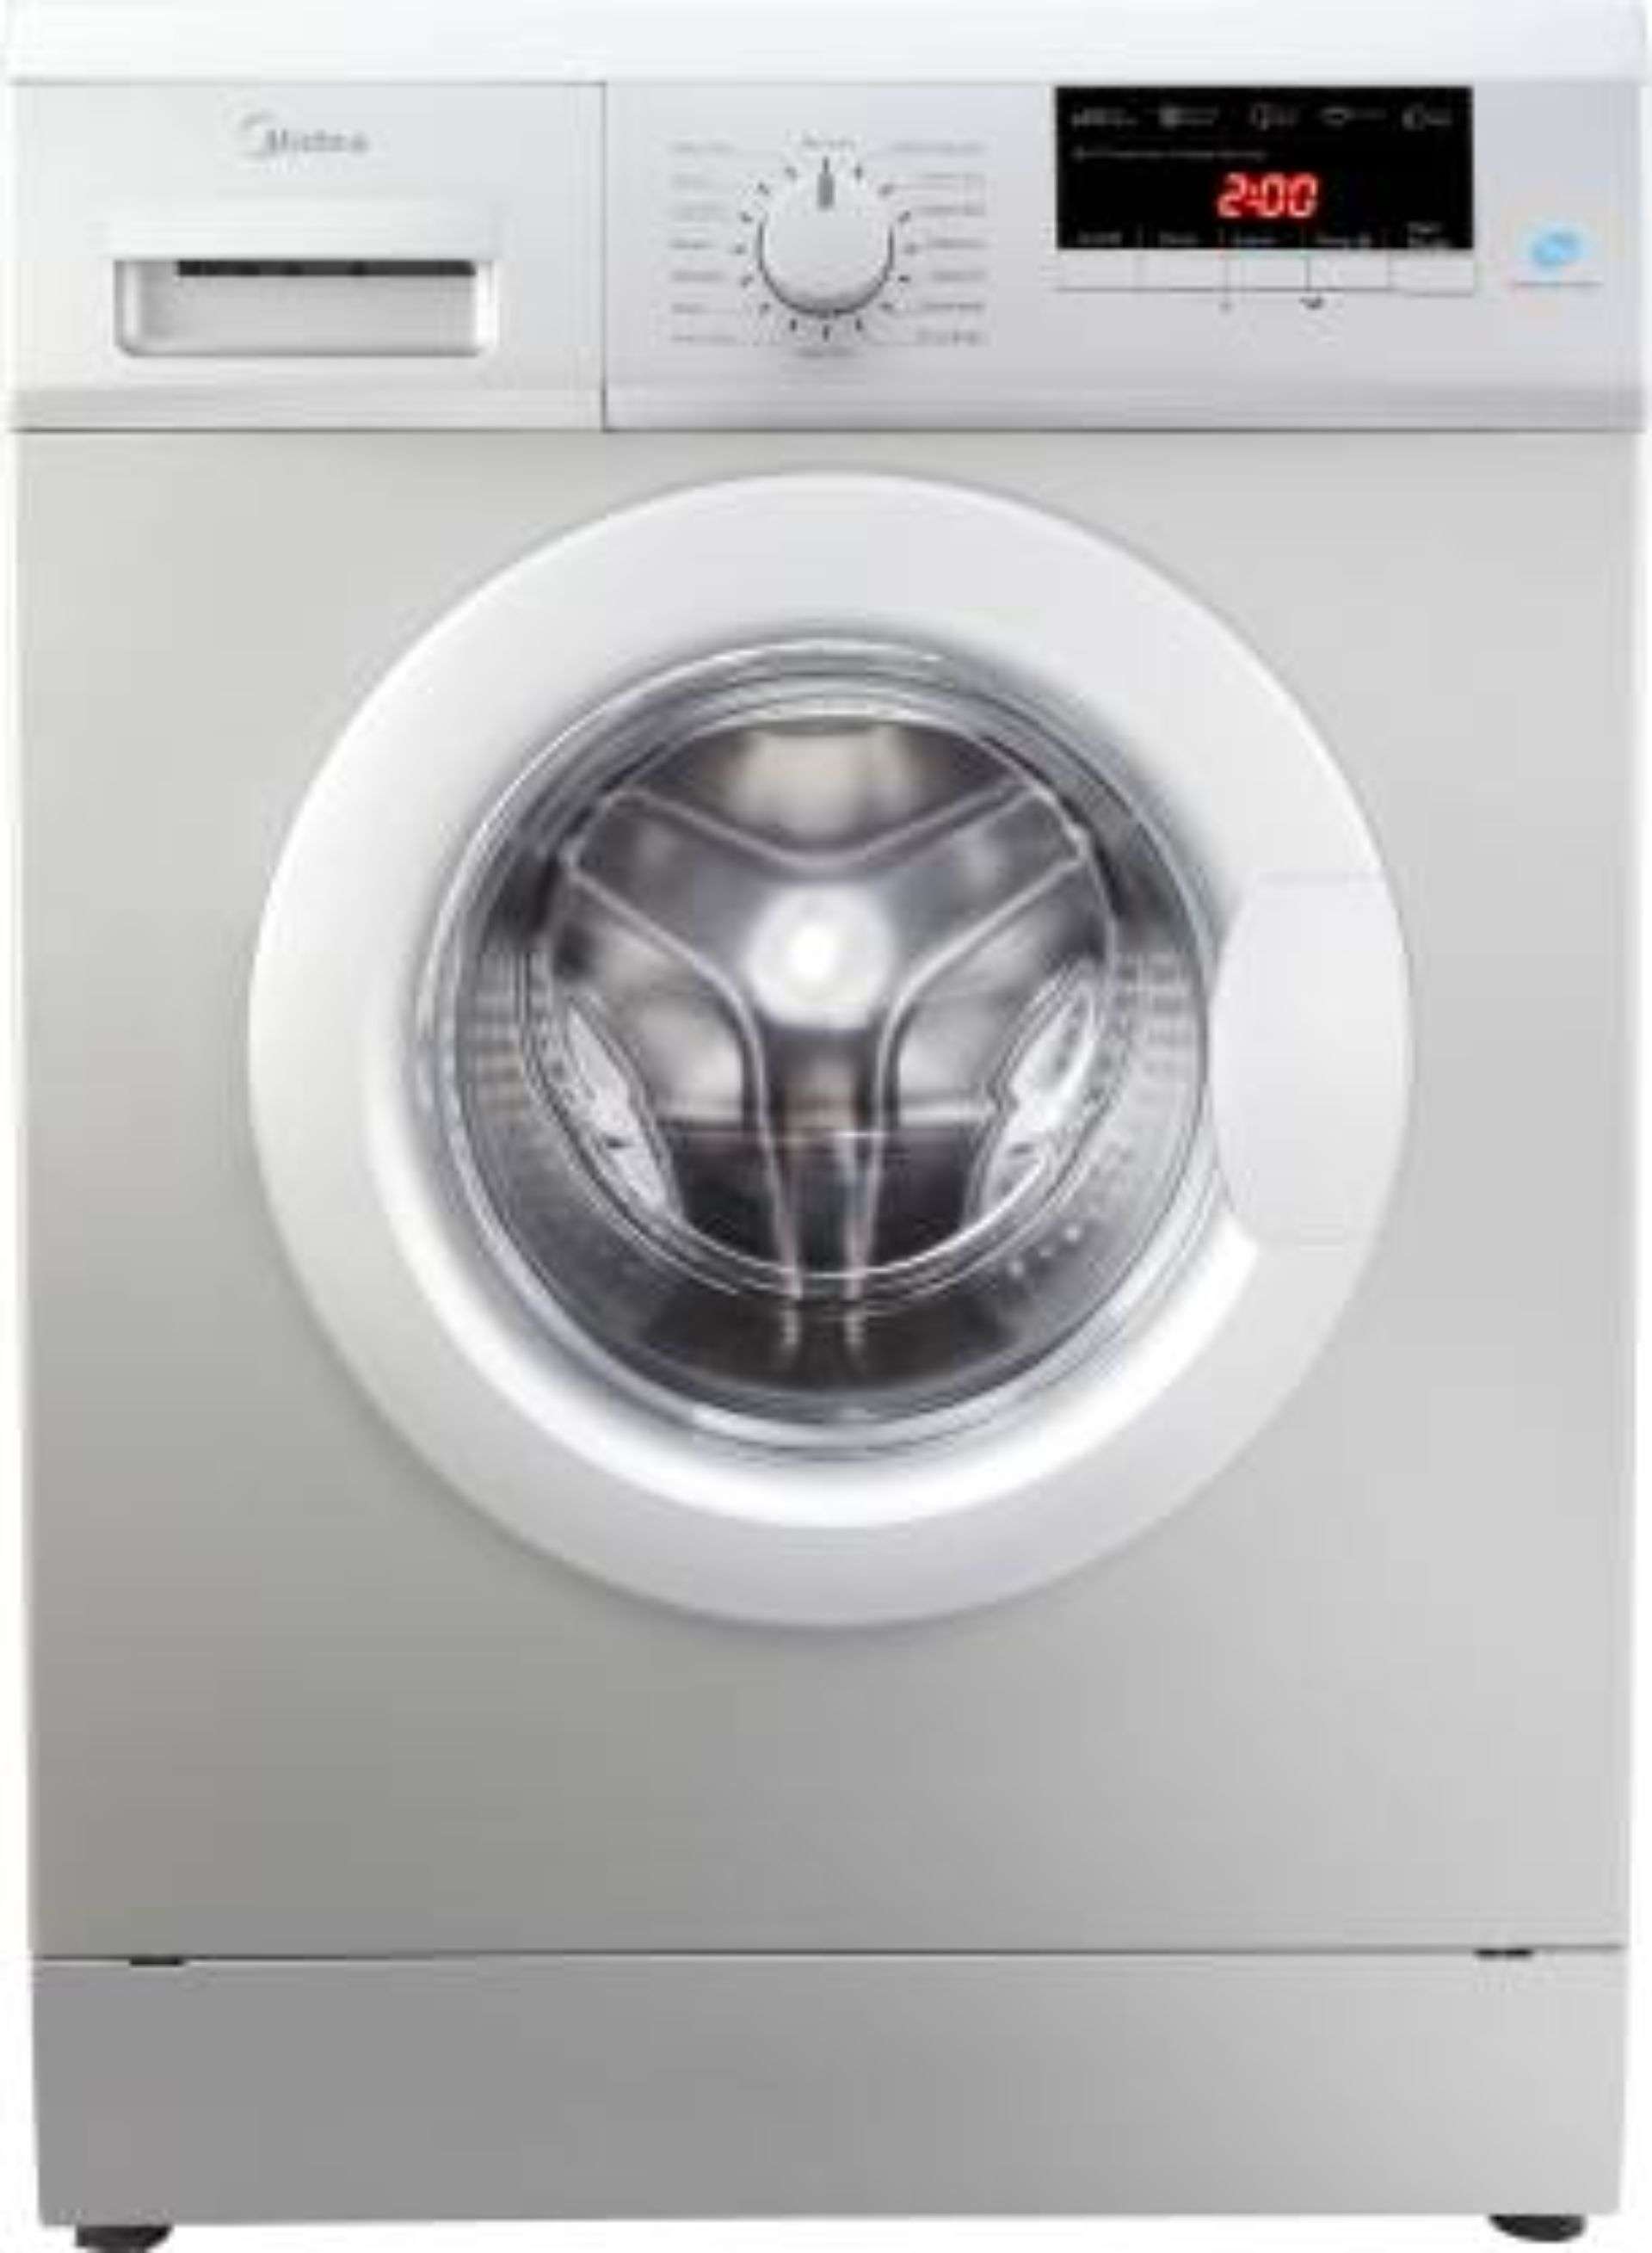  Buy Washing machine online